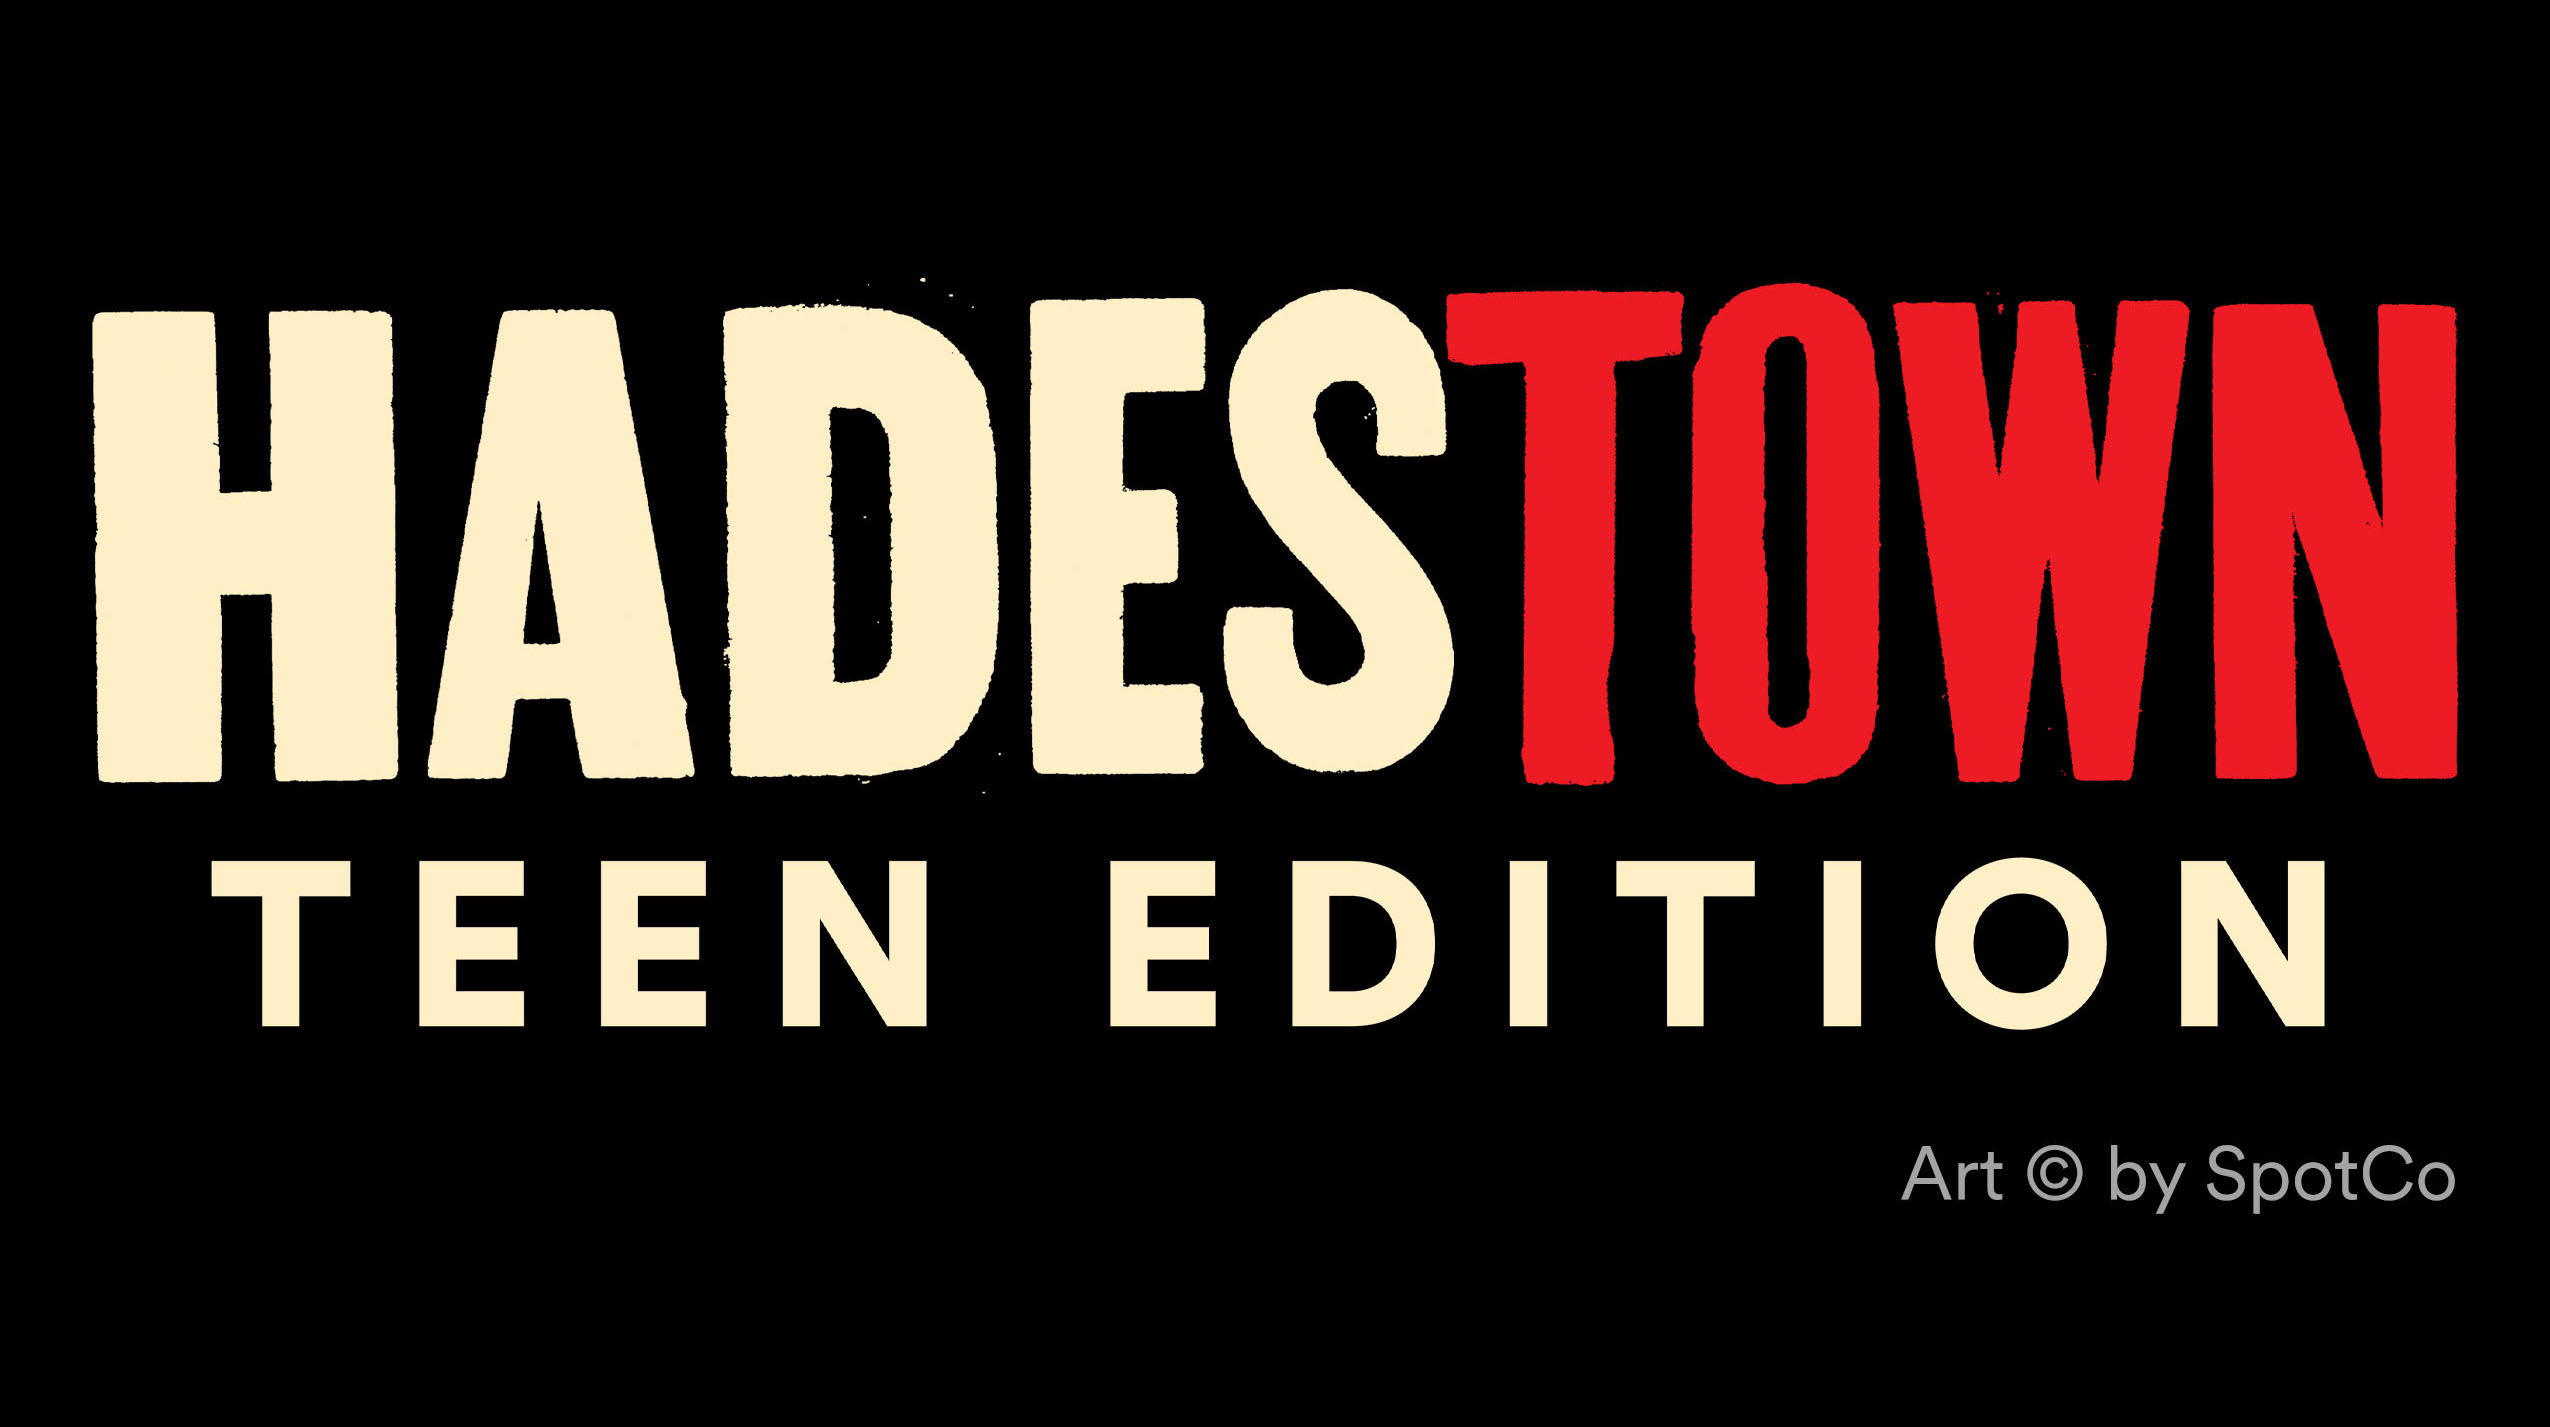 Hadestown Teen Edition logo